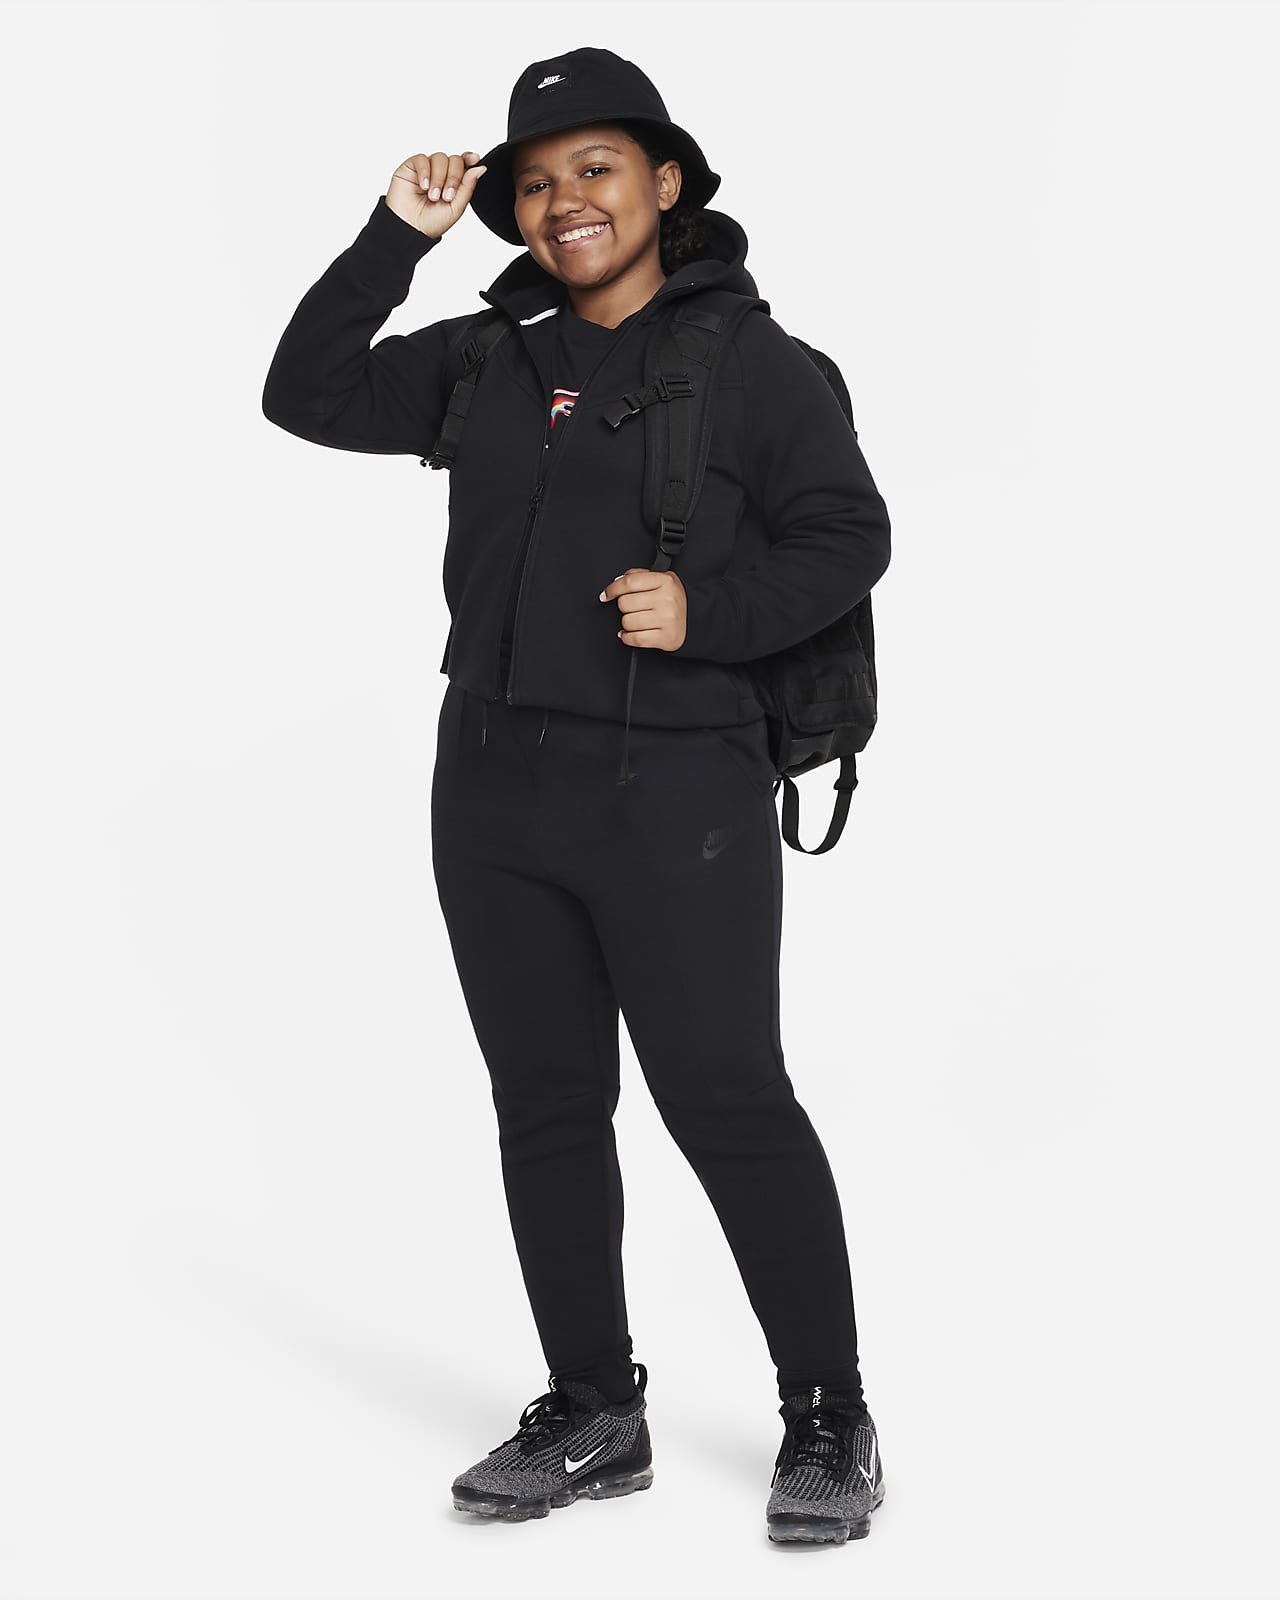 Survêtement Nike Sportswear Tech Fleece pour ado (fille) (taille